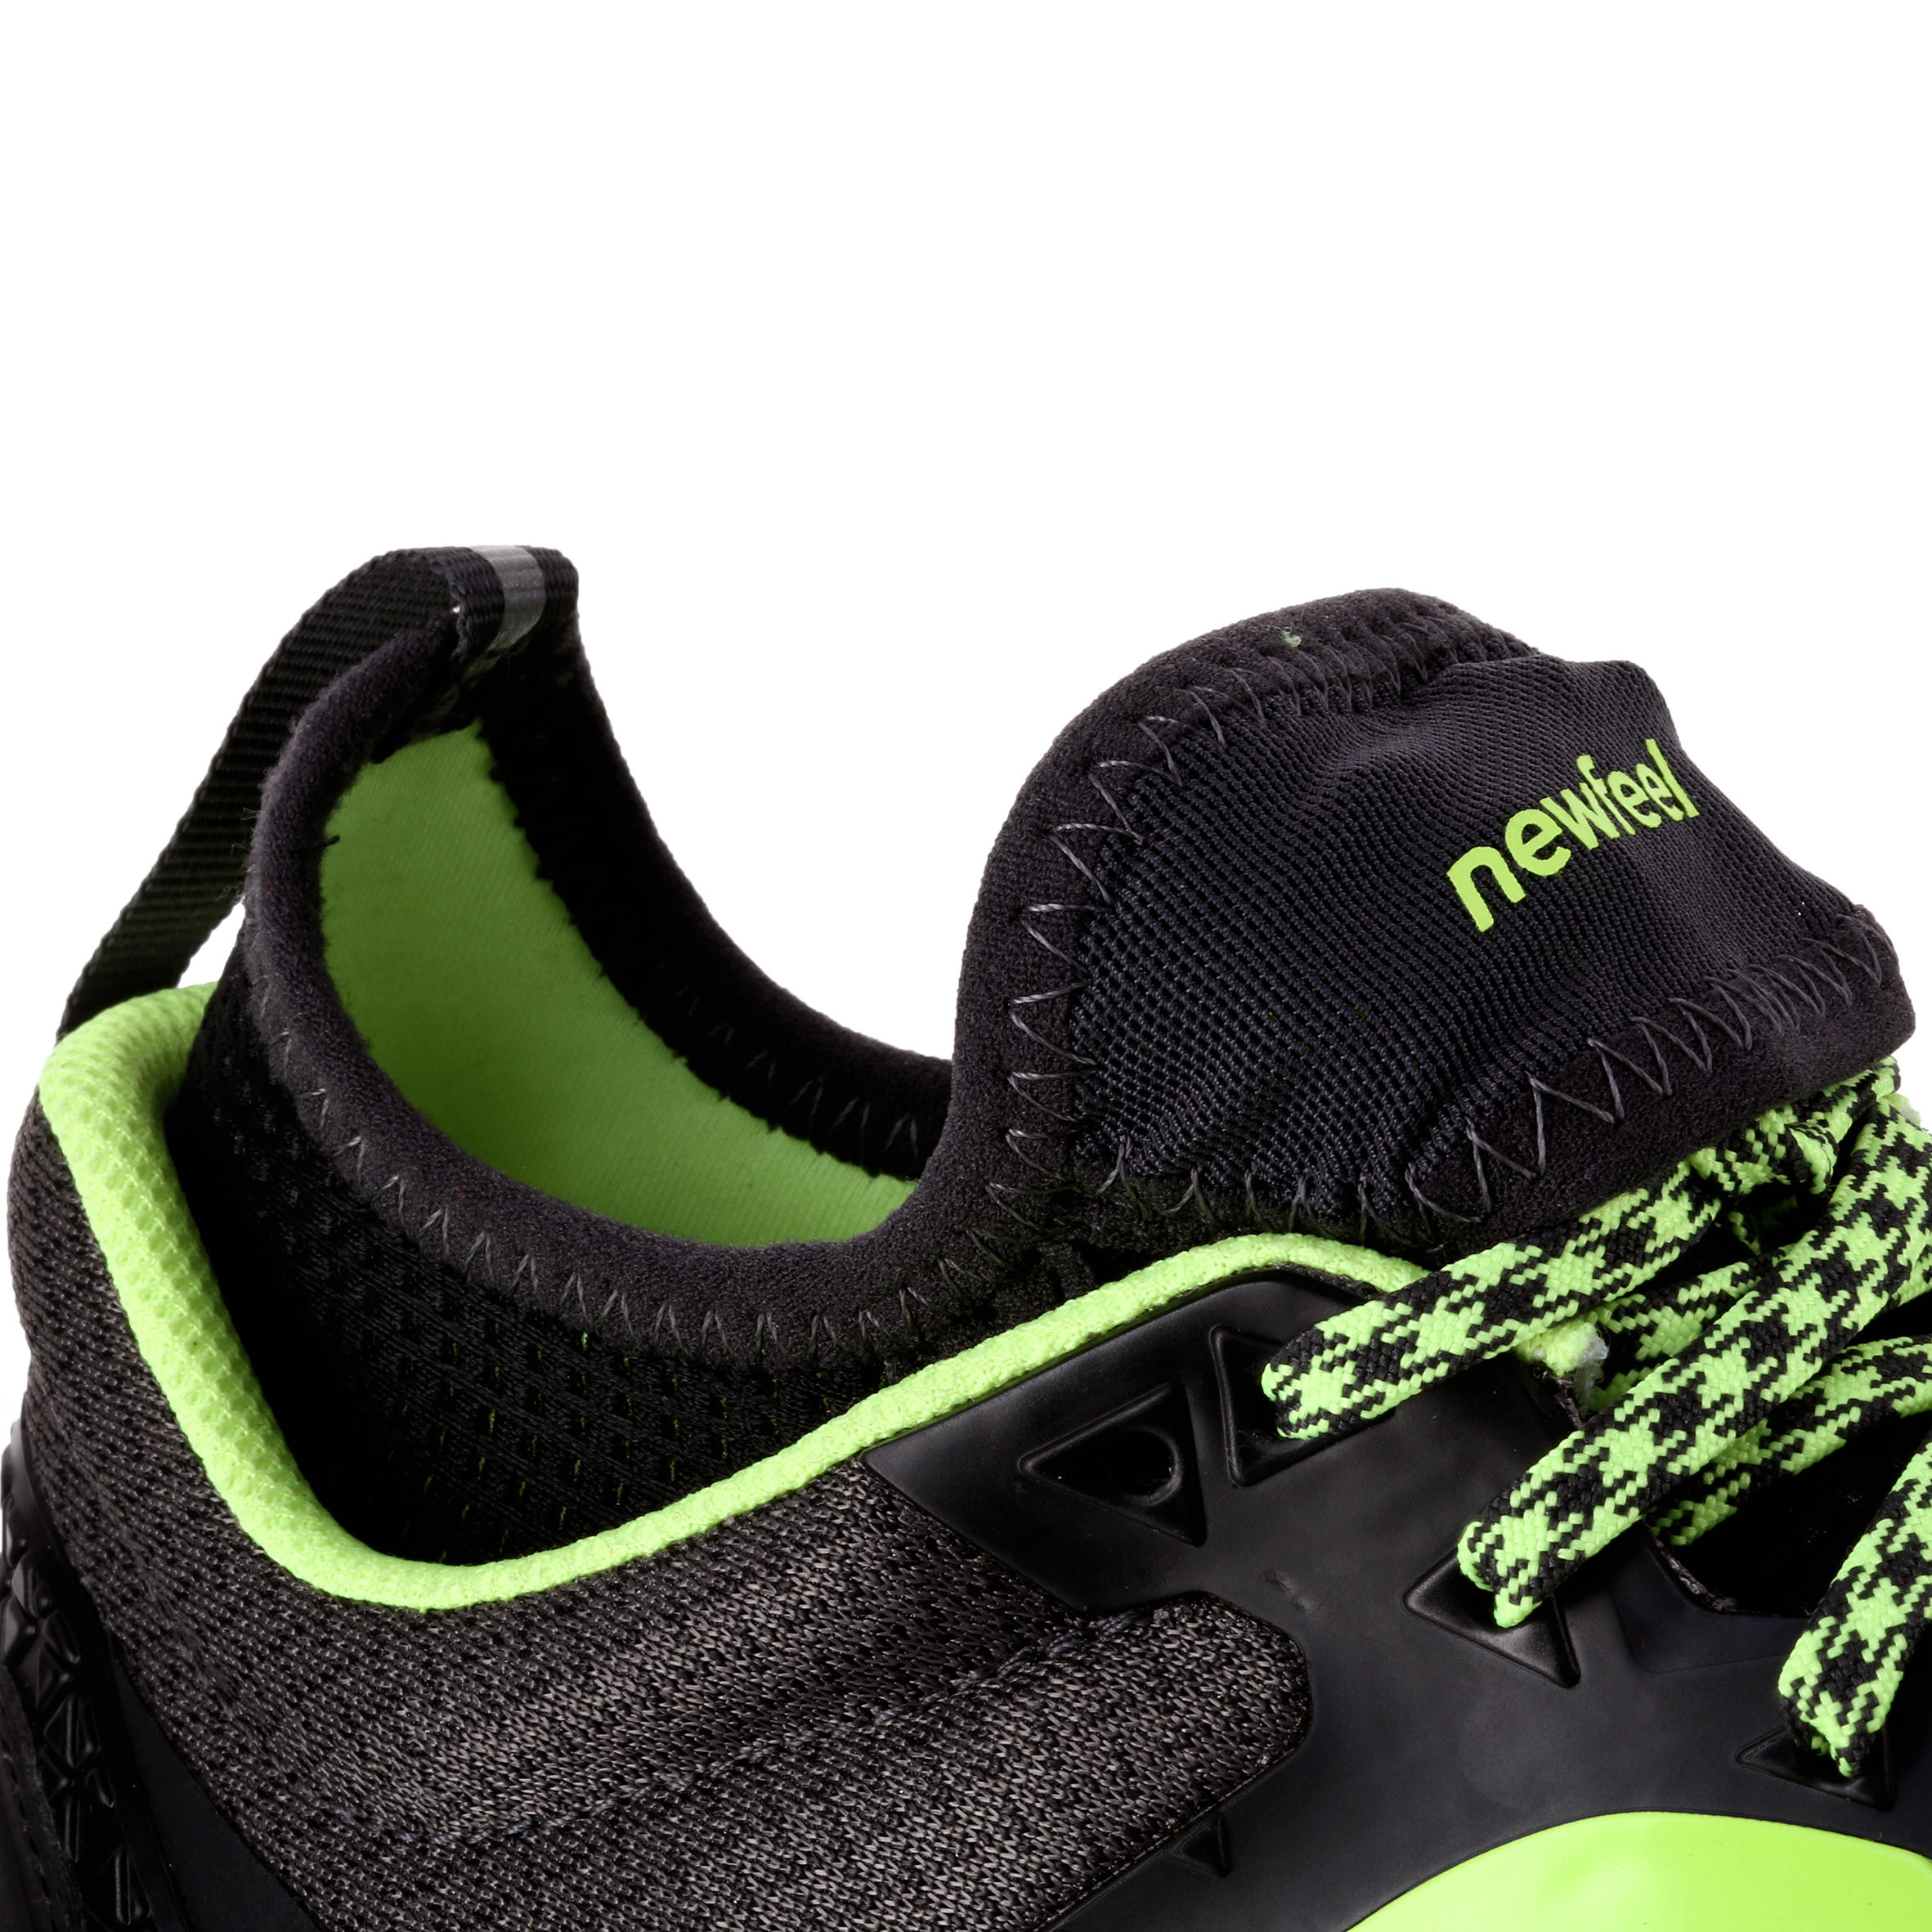 Men's Nordic Walking Shoes NW 900 Flex-H - Black/Green 4/8